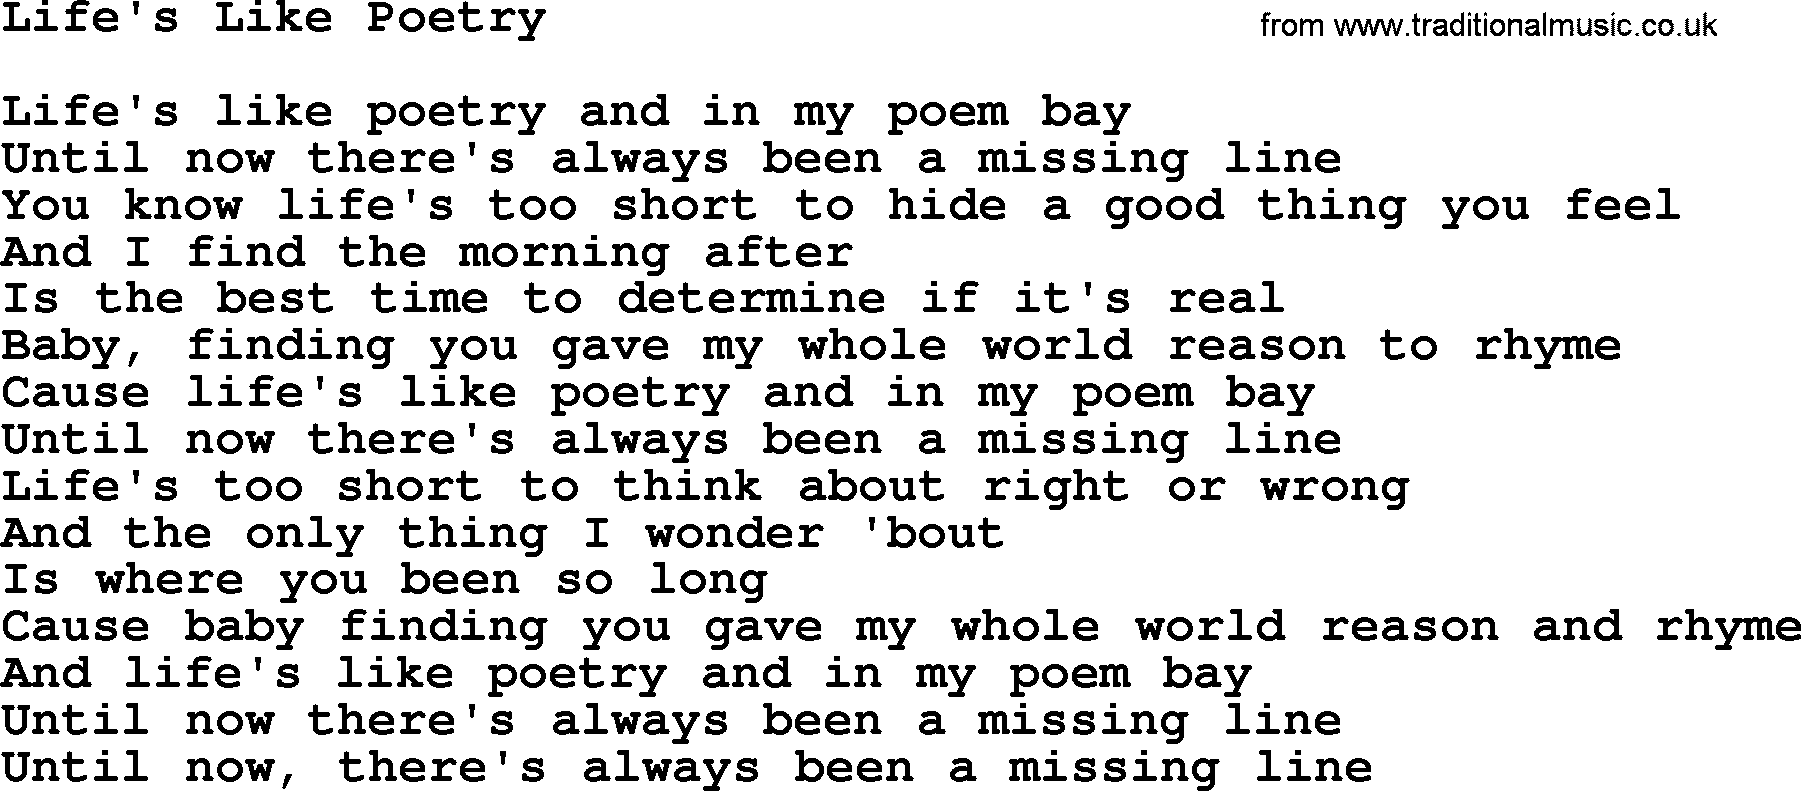 Dolly Parton song Life's Like Poetry.txt lyrics